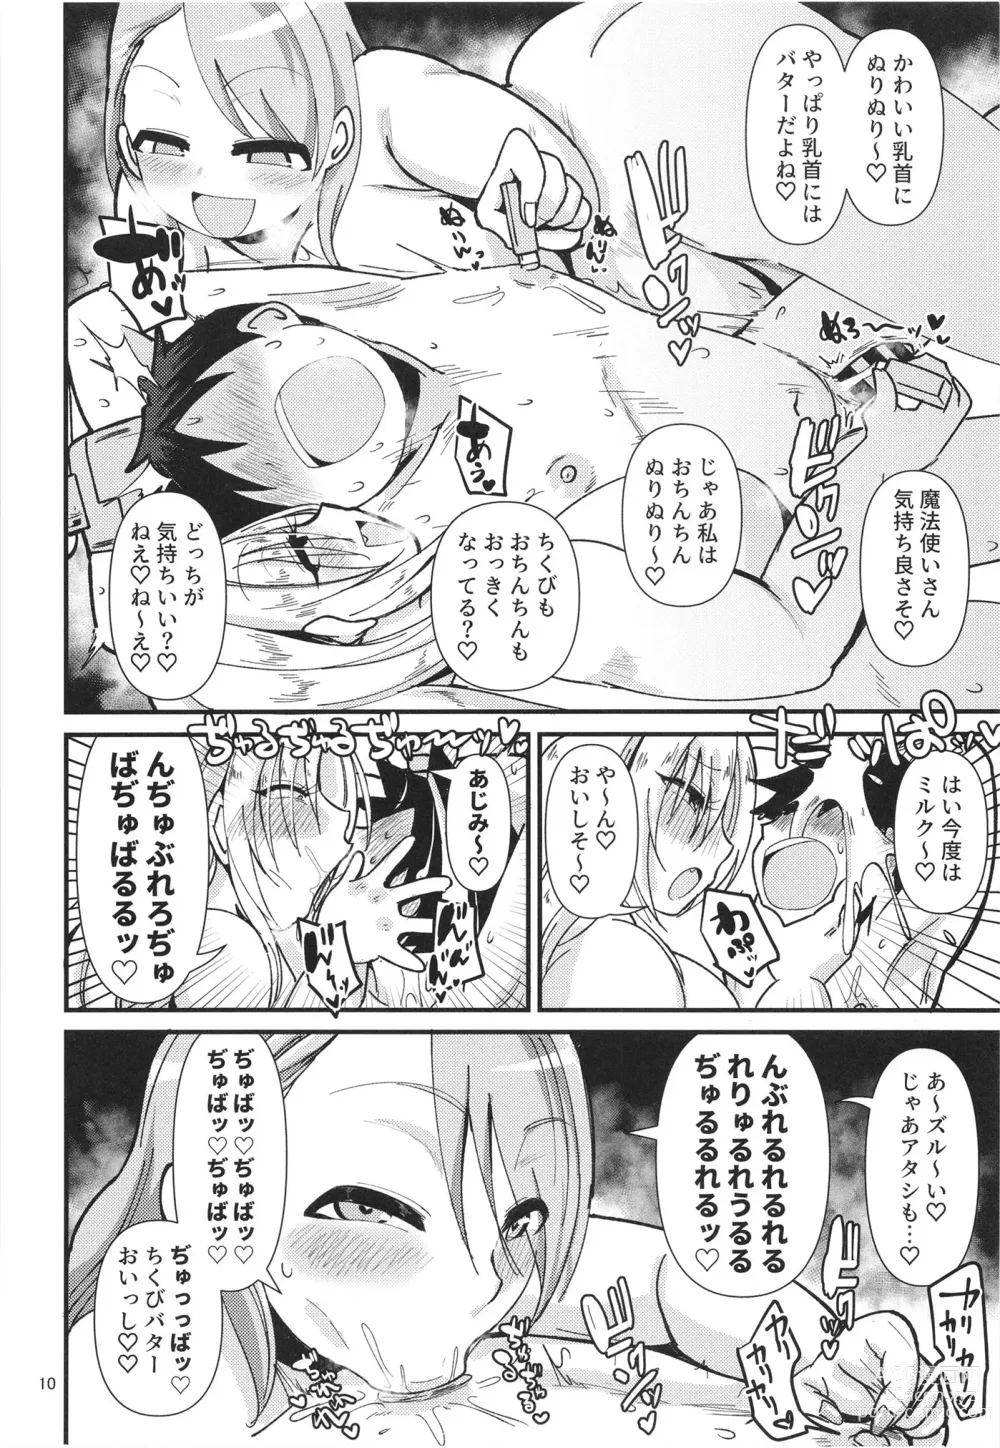 Page 10 of doujinshi Muchimuchi to kare